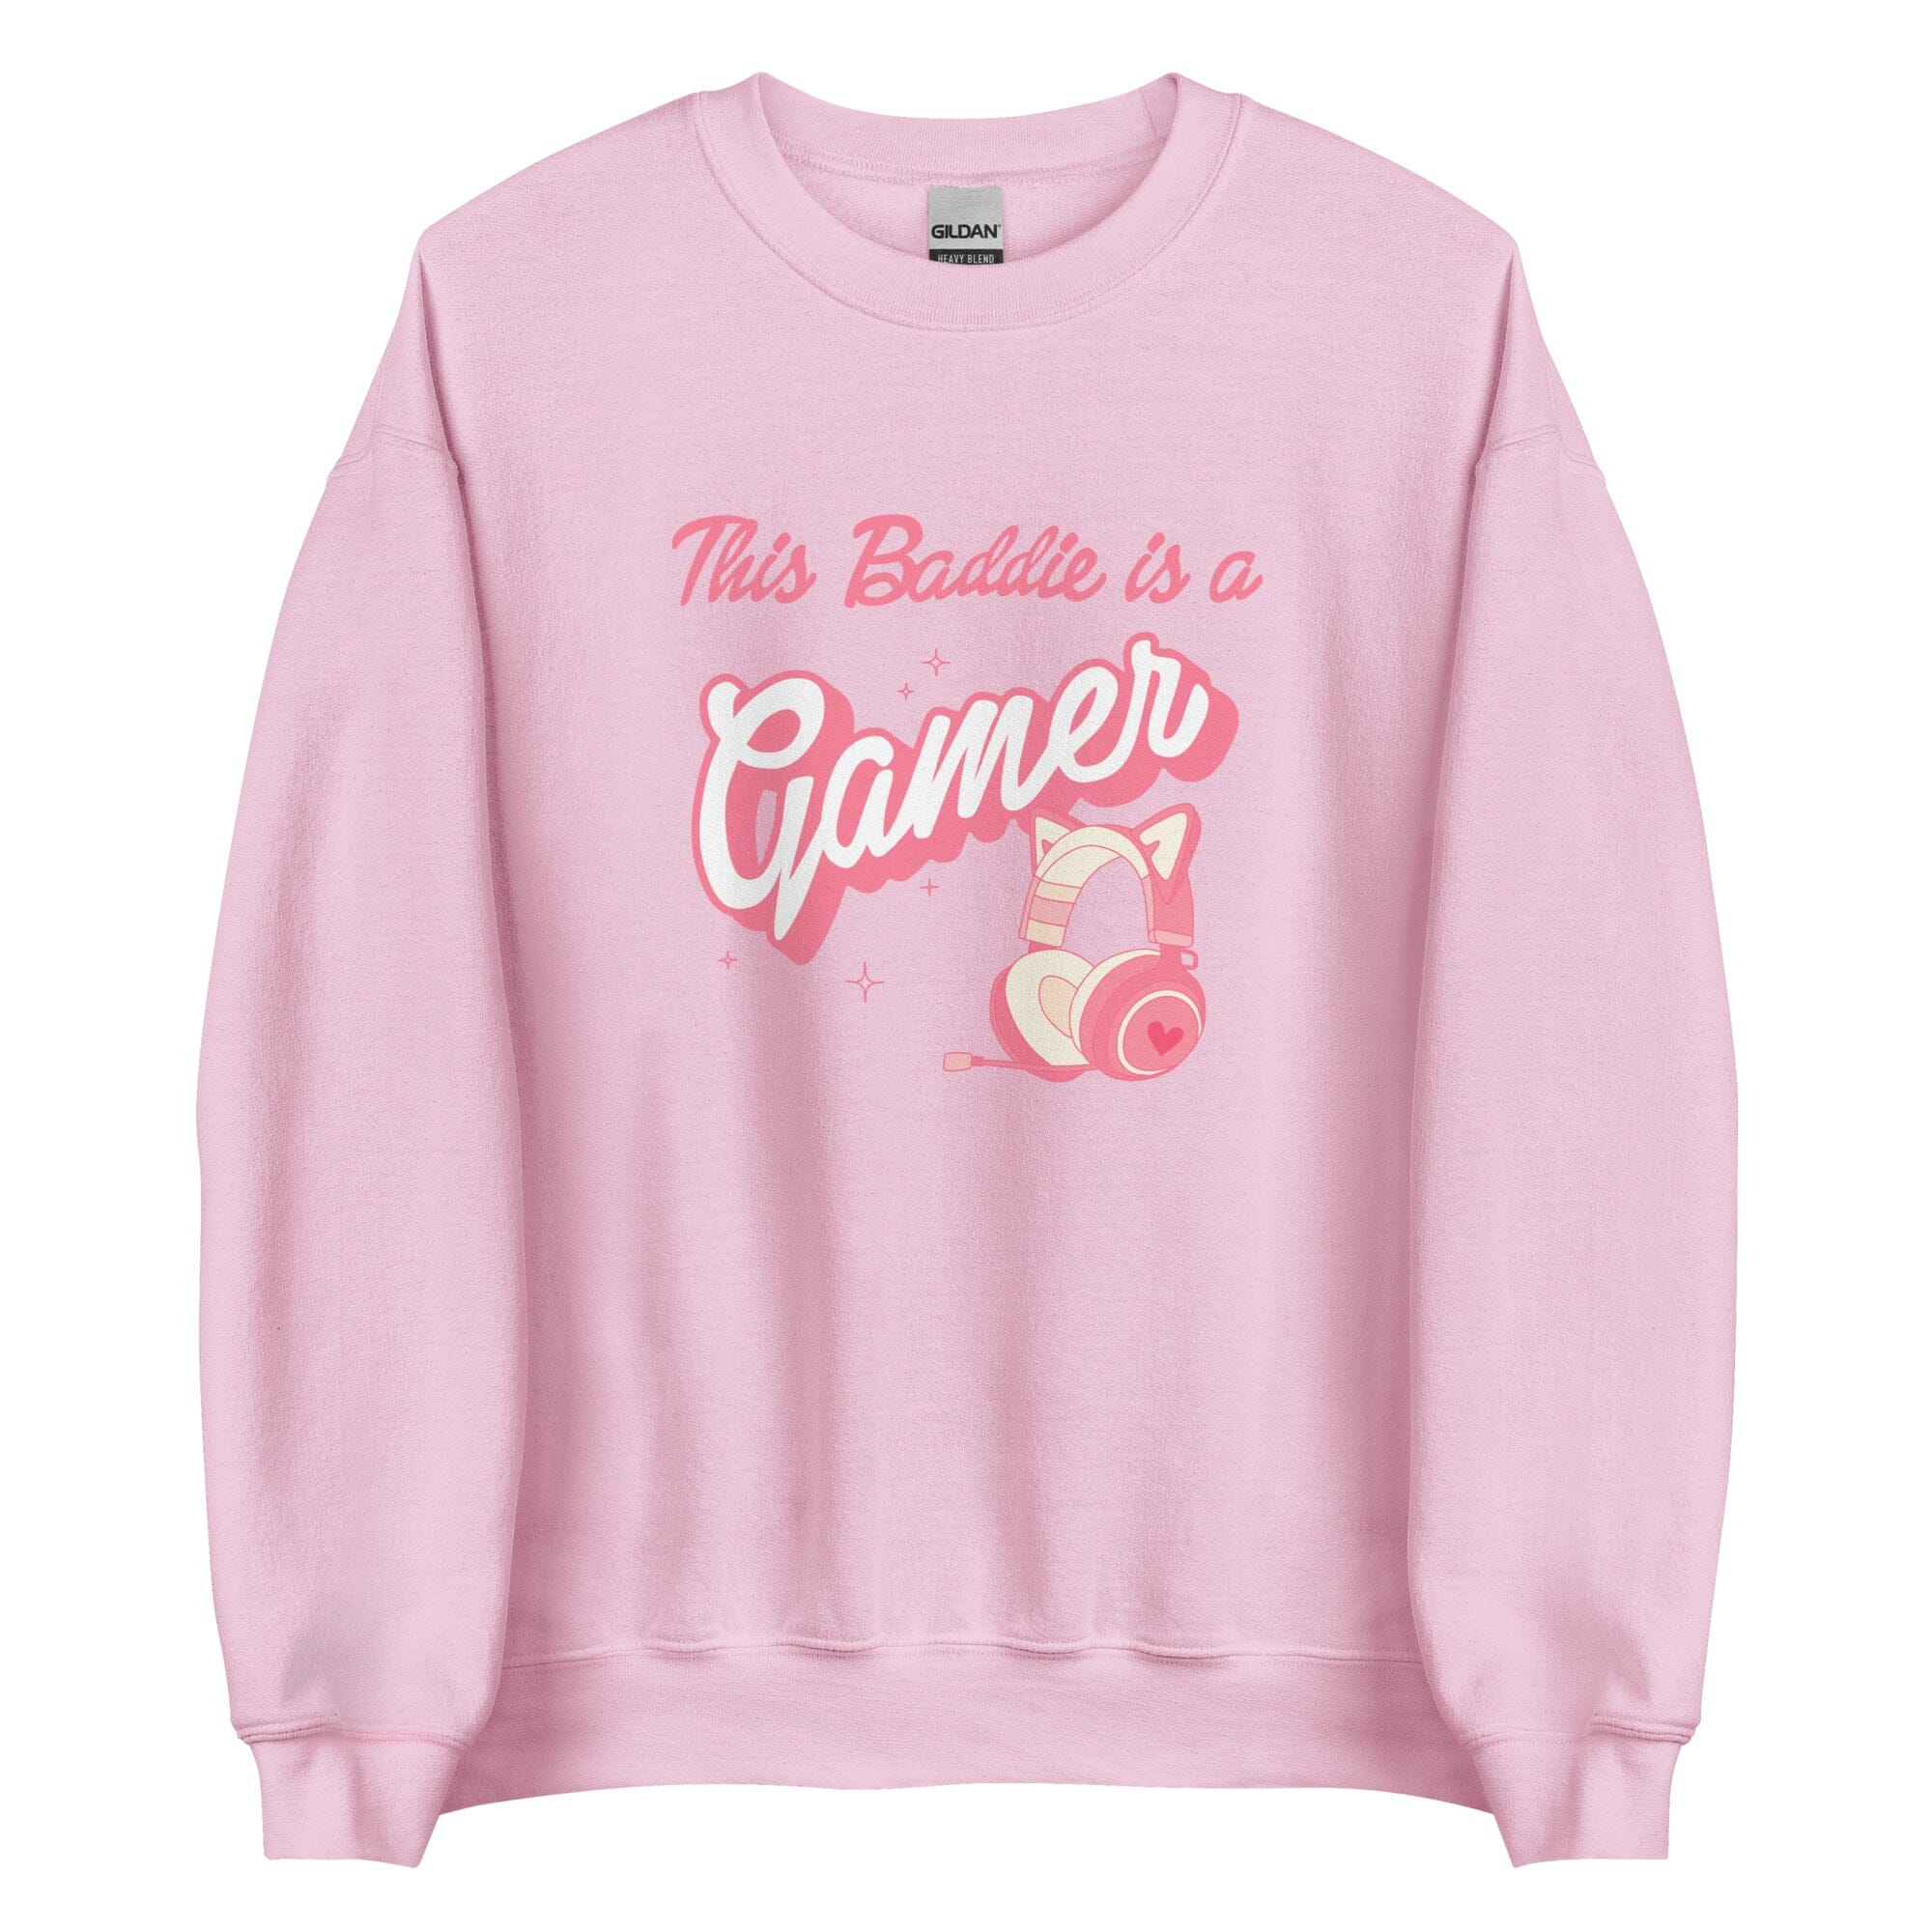 This Baddie is a Gamer | Unisex Sweatshirt | Feminist Gamer Threads & Thistles Inventory Light Pink (Girly Girl) S 